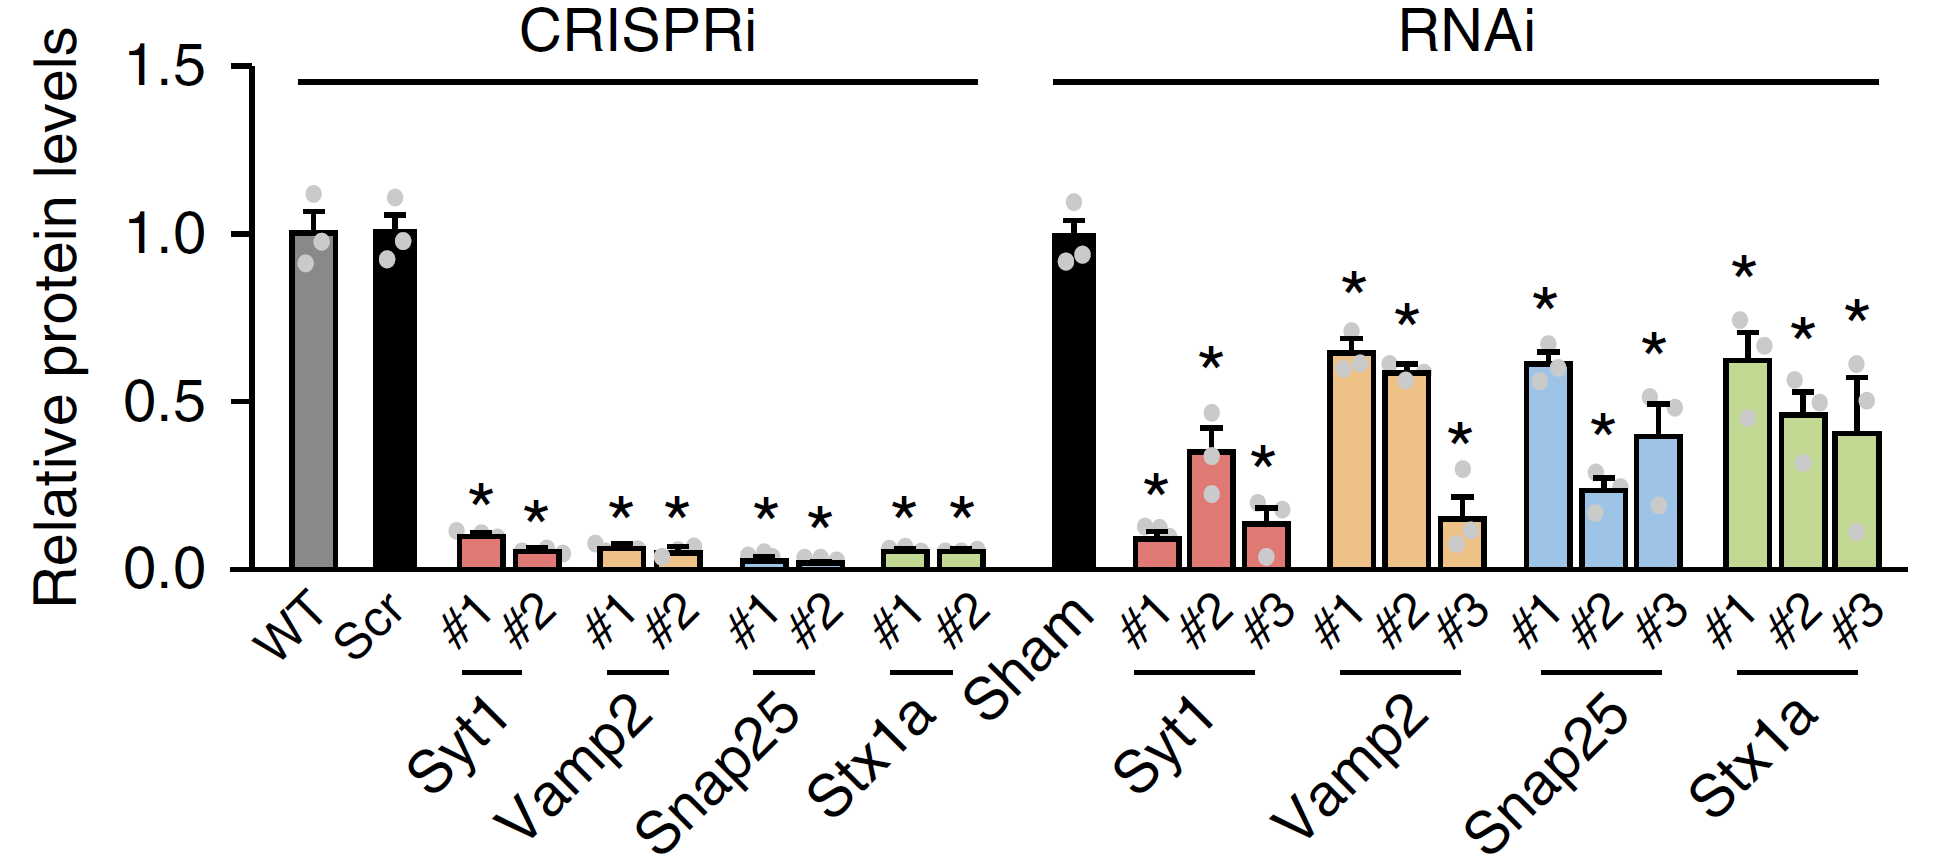 The knockdown effect of CRISPRi is generally better than RNAi